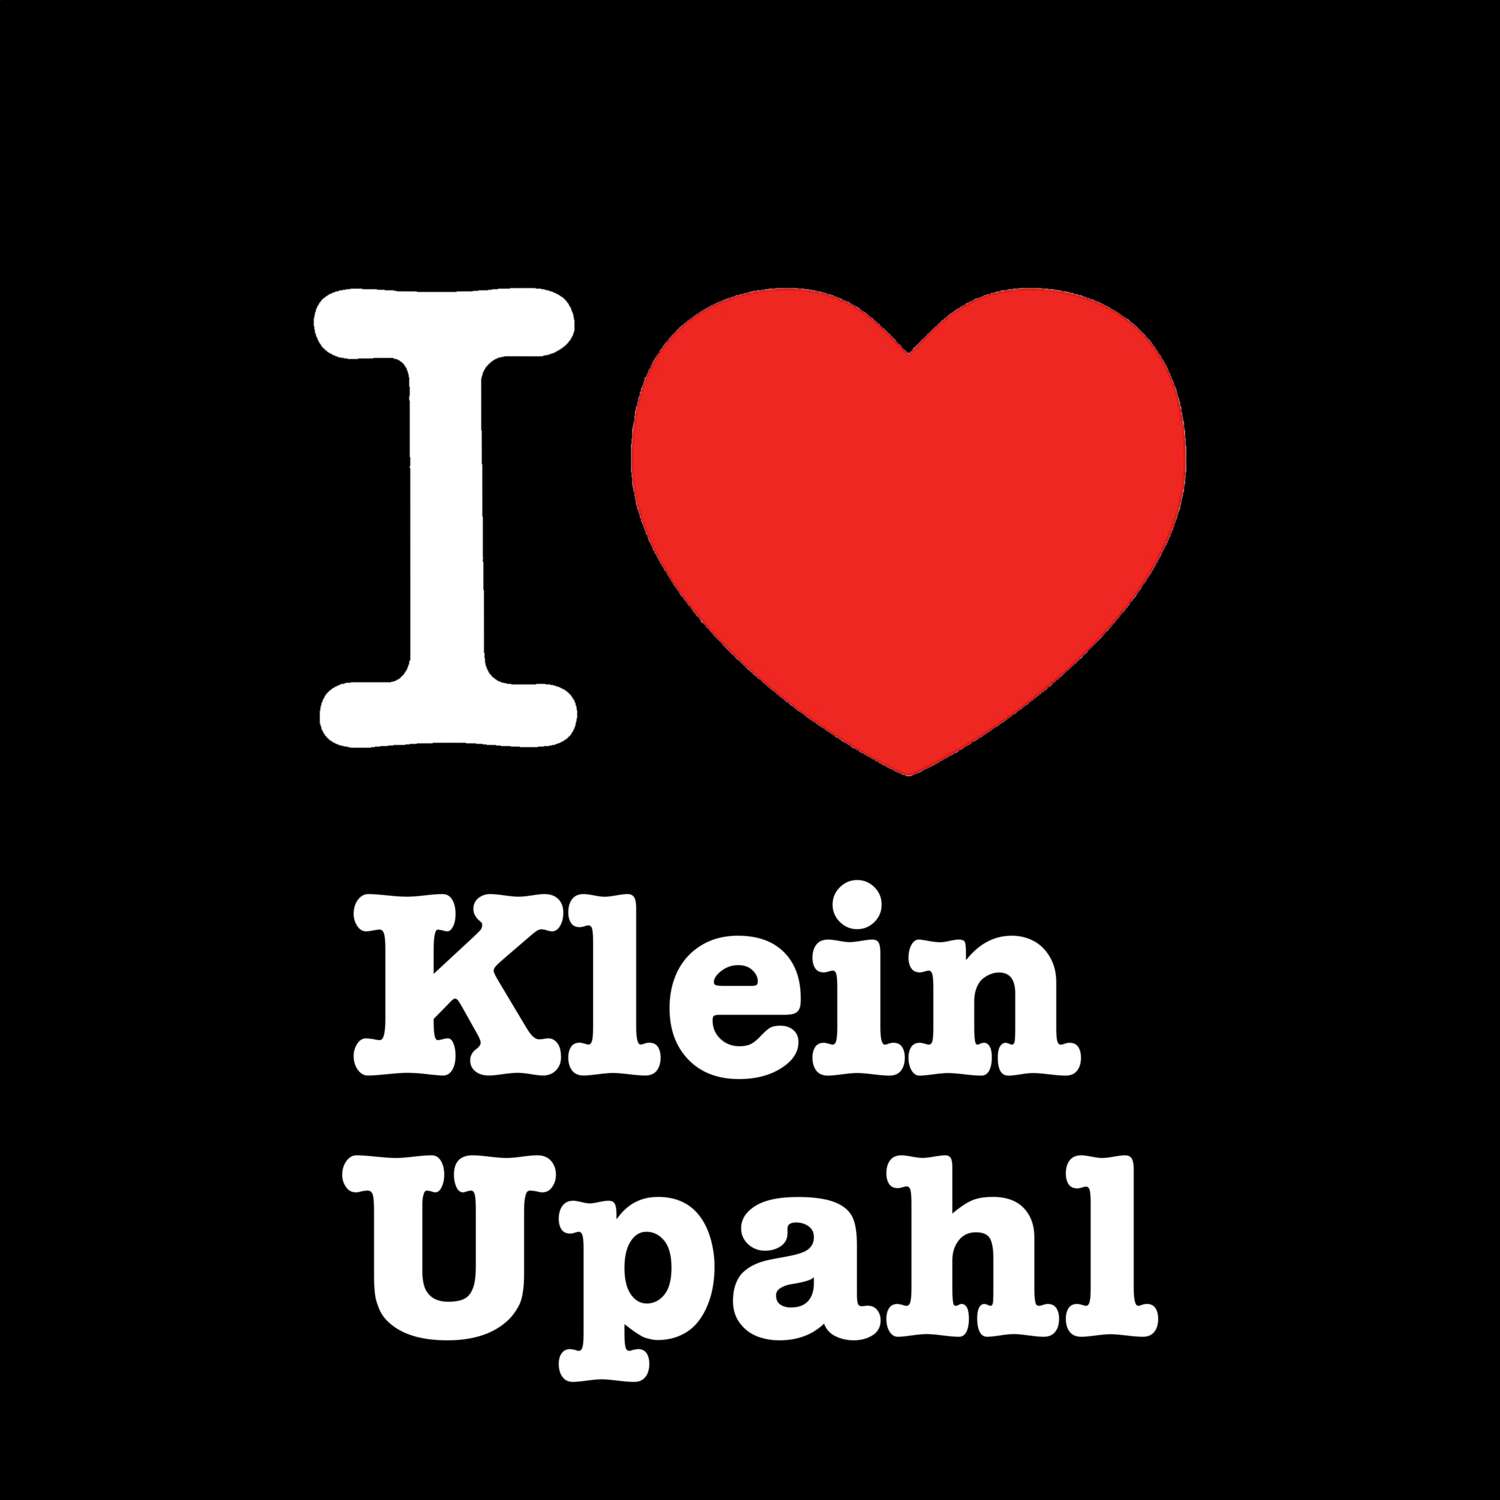 Klein Upahl T-Shirt »I love«